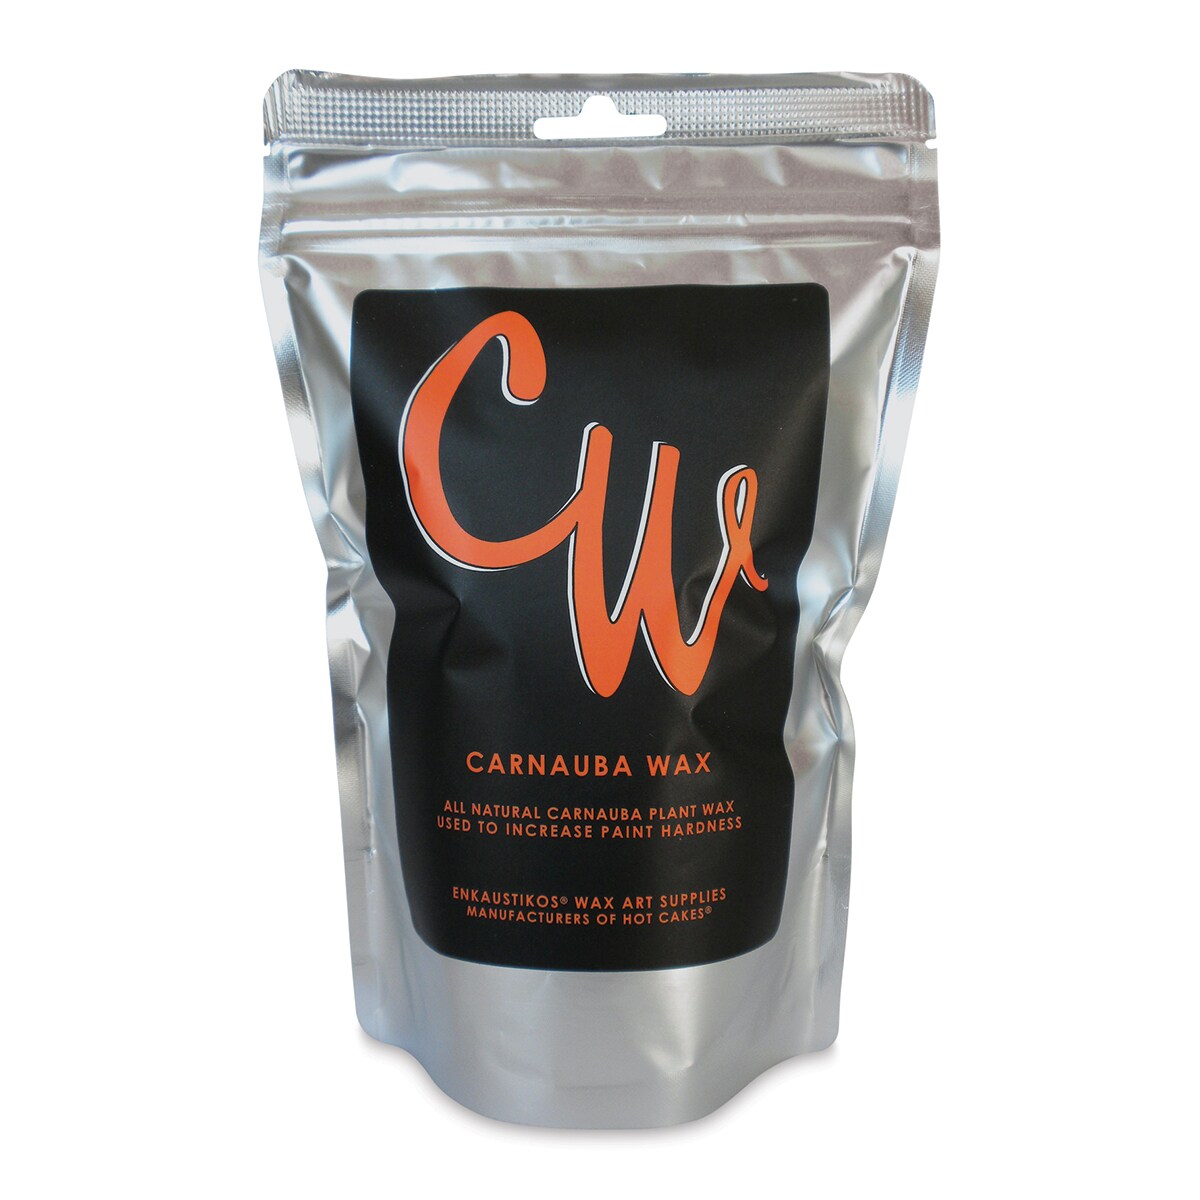 Enkauarikos Carnauba Wax - 16 oz bag